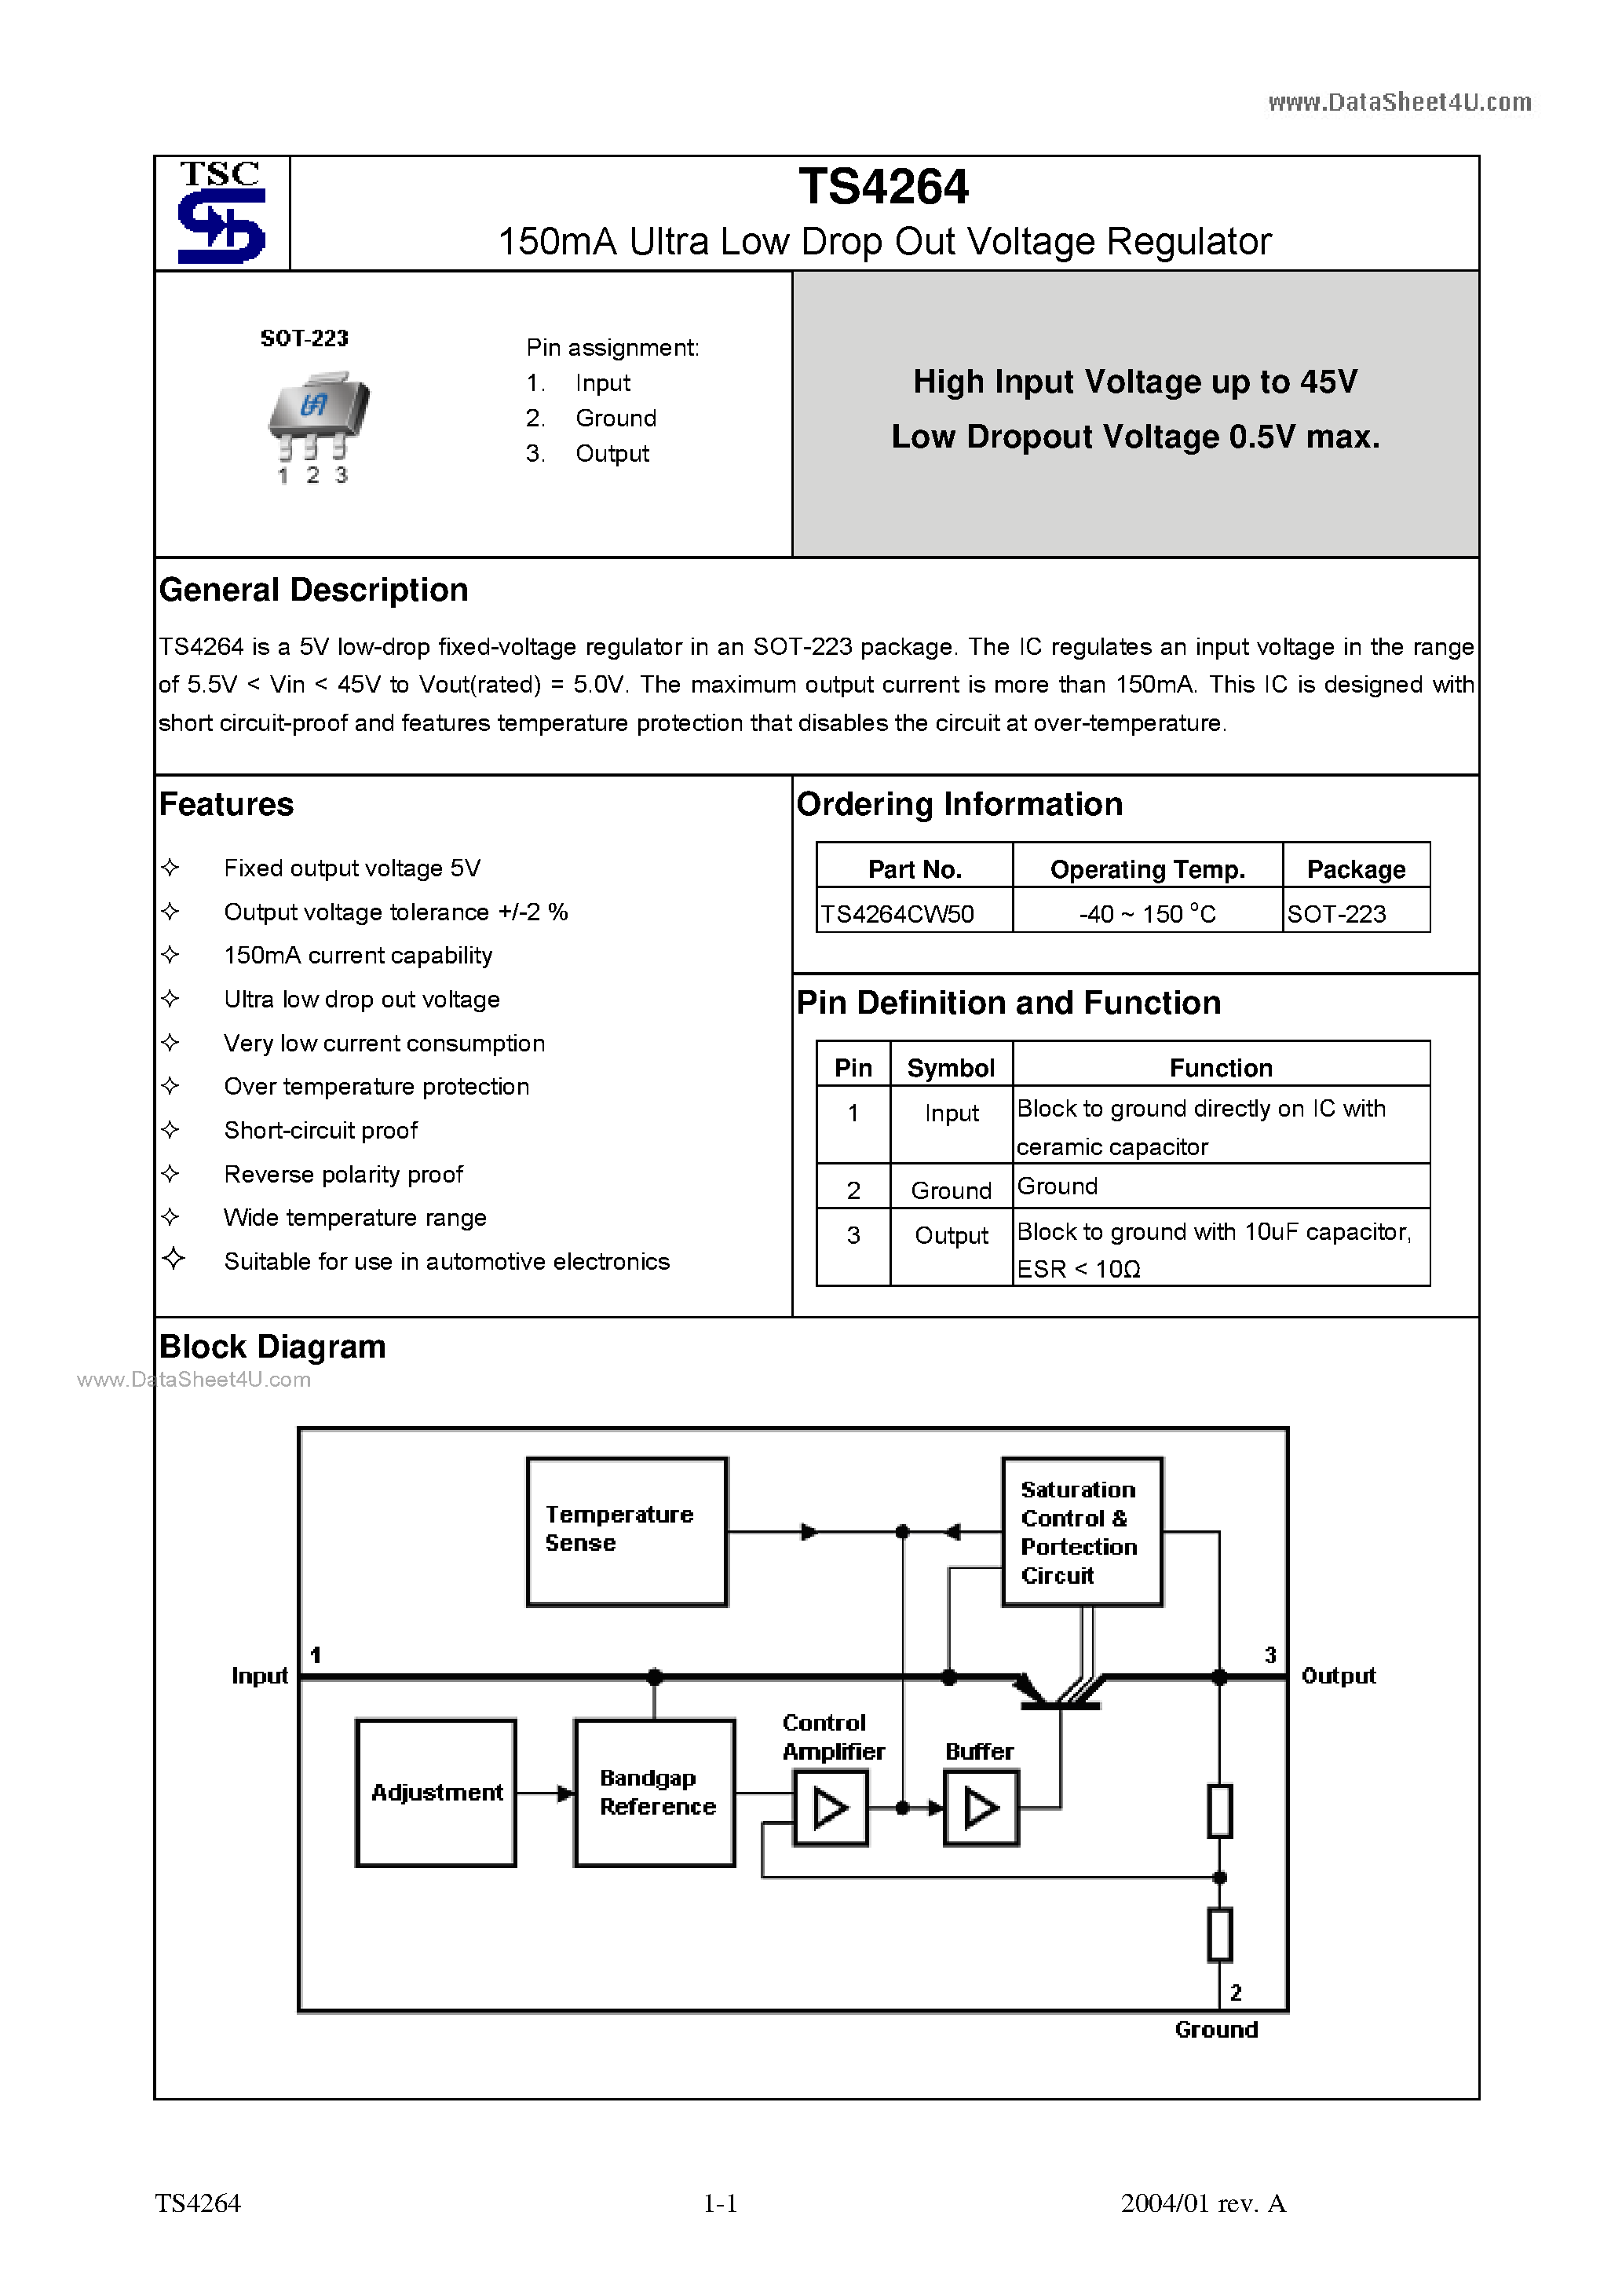 Даташит TS4264 - 150mA Ultra Low Drop Out Voltage Regulator страница 1